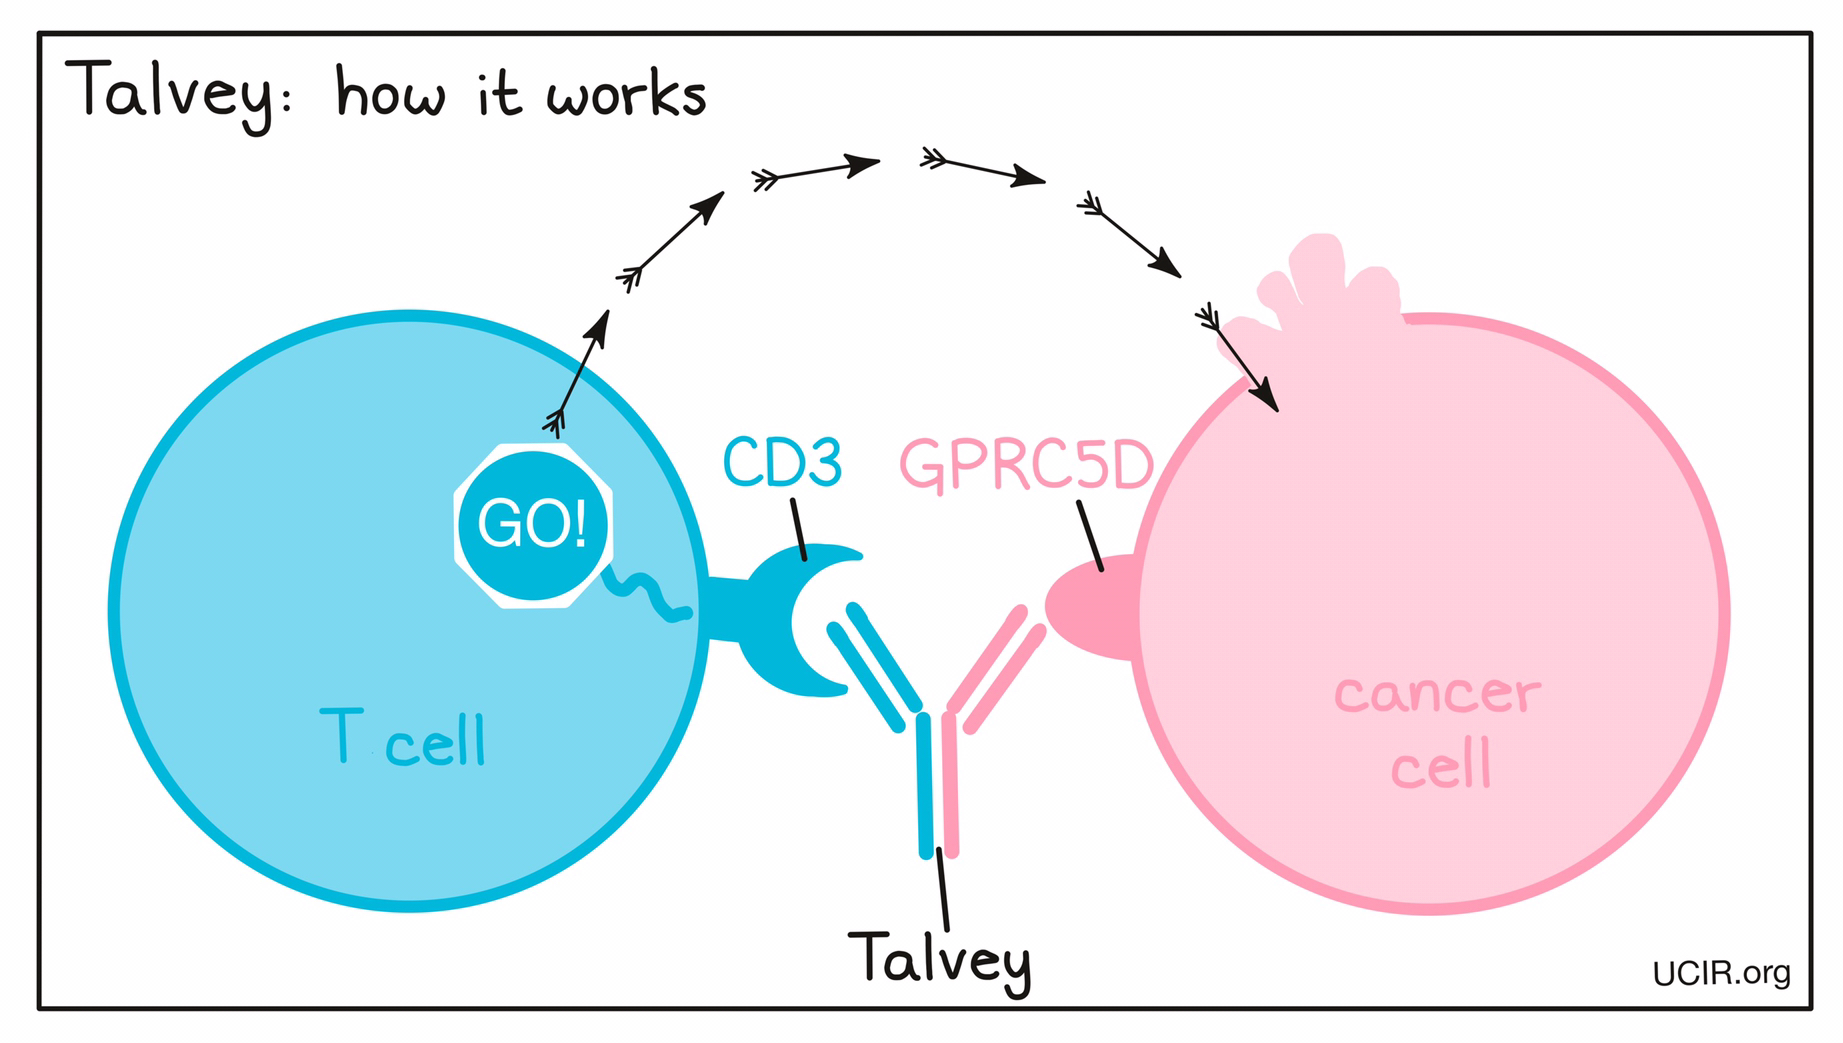 Illustration showing how Talvey works